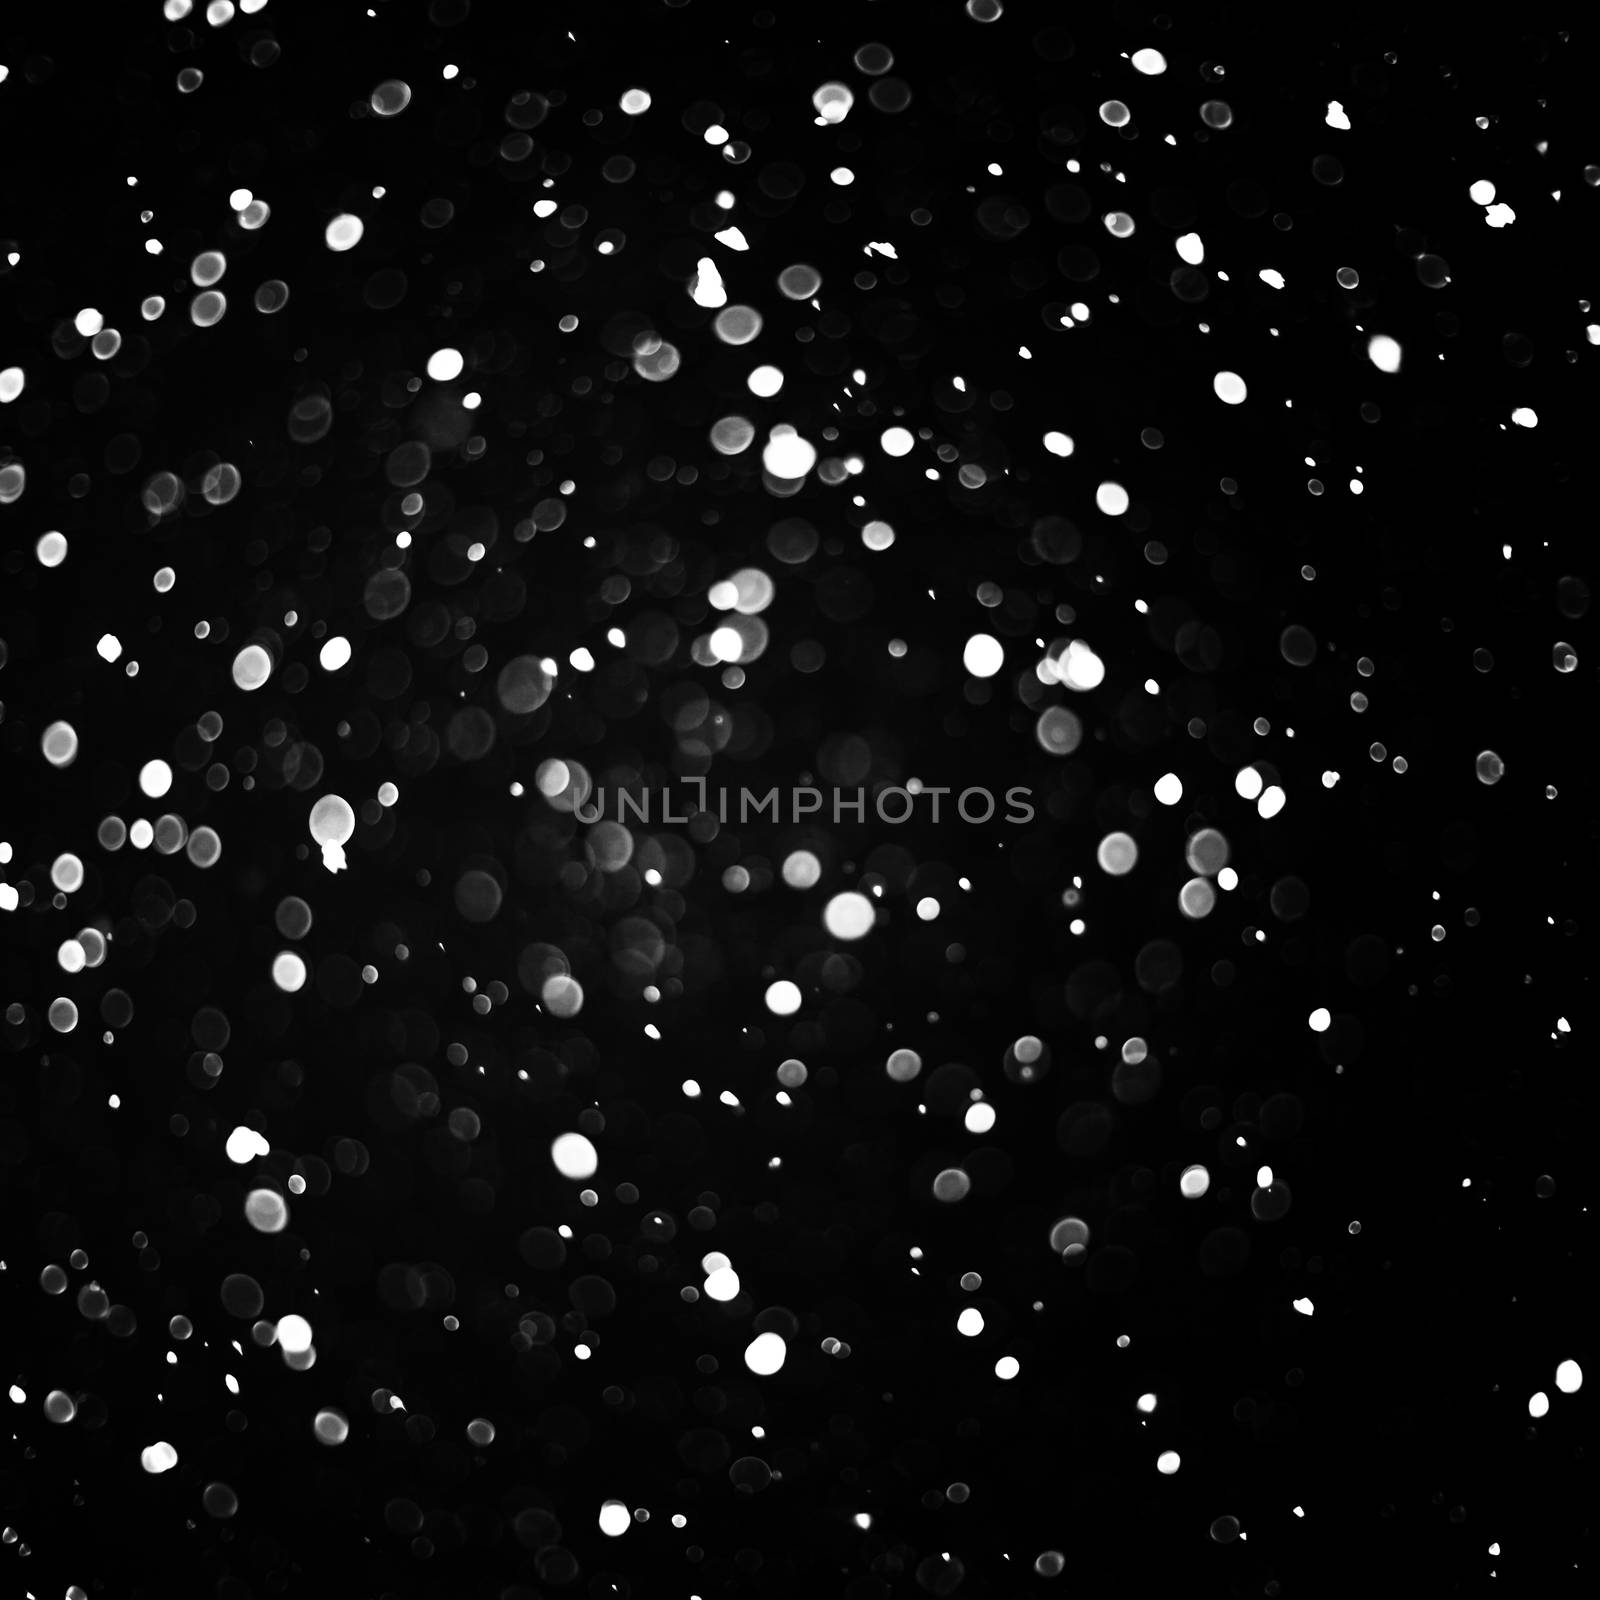 Falling snow background - snowflakes over night dark sky